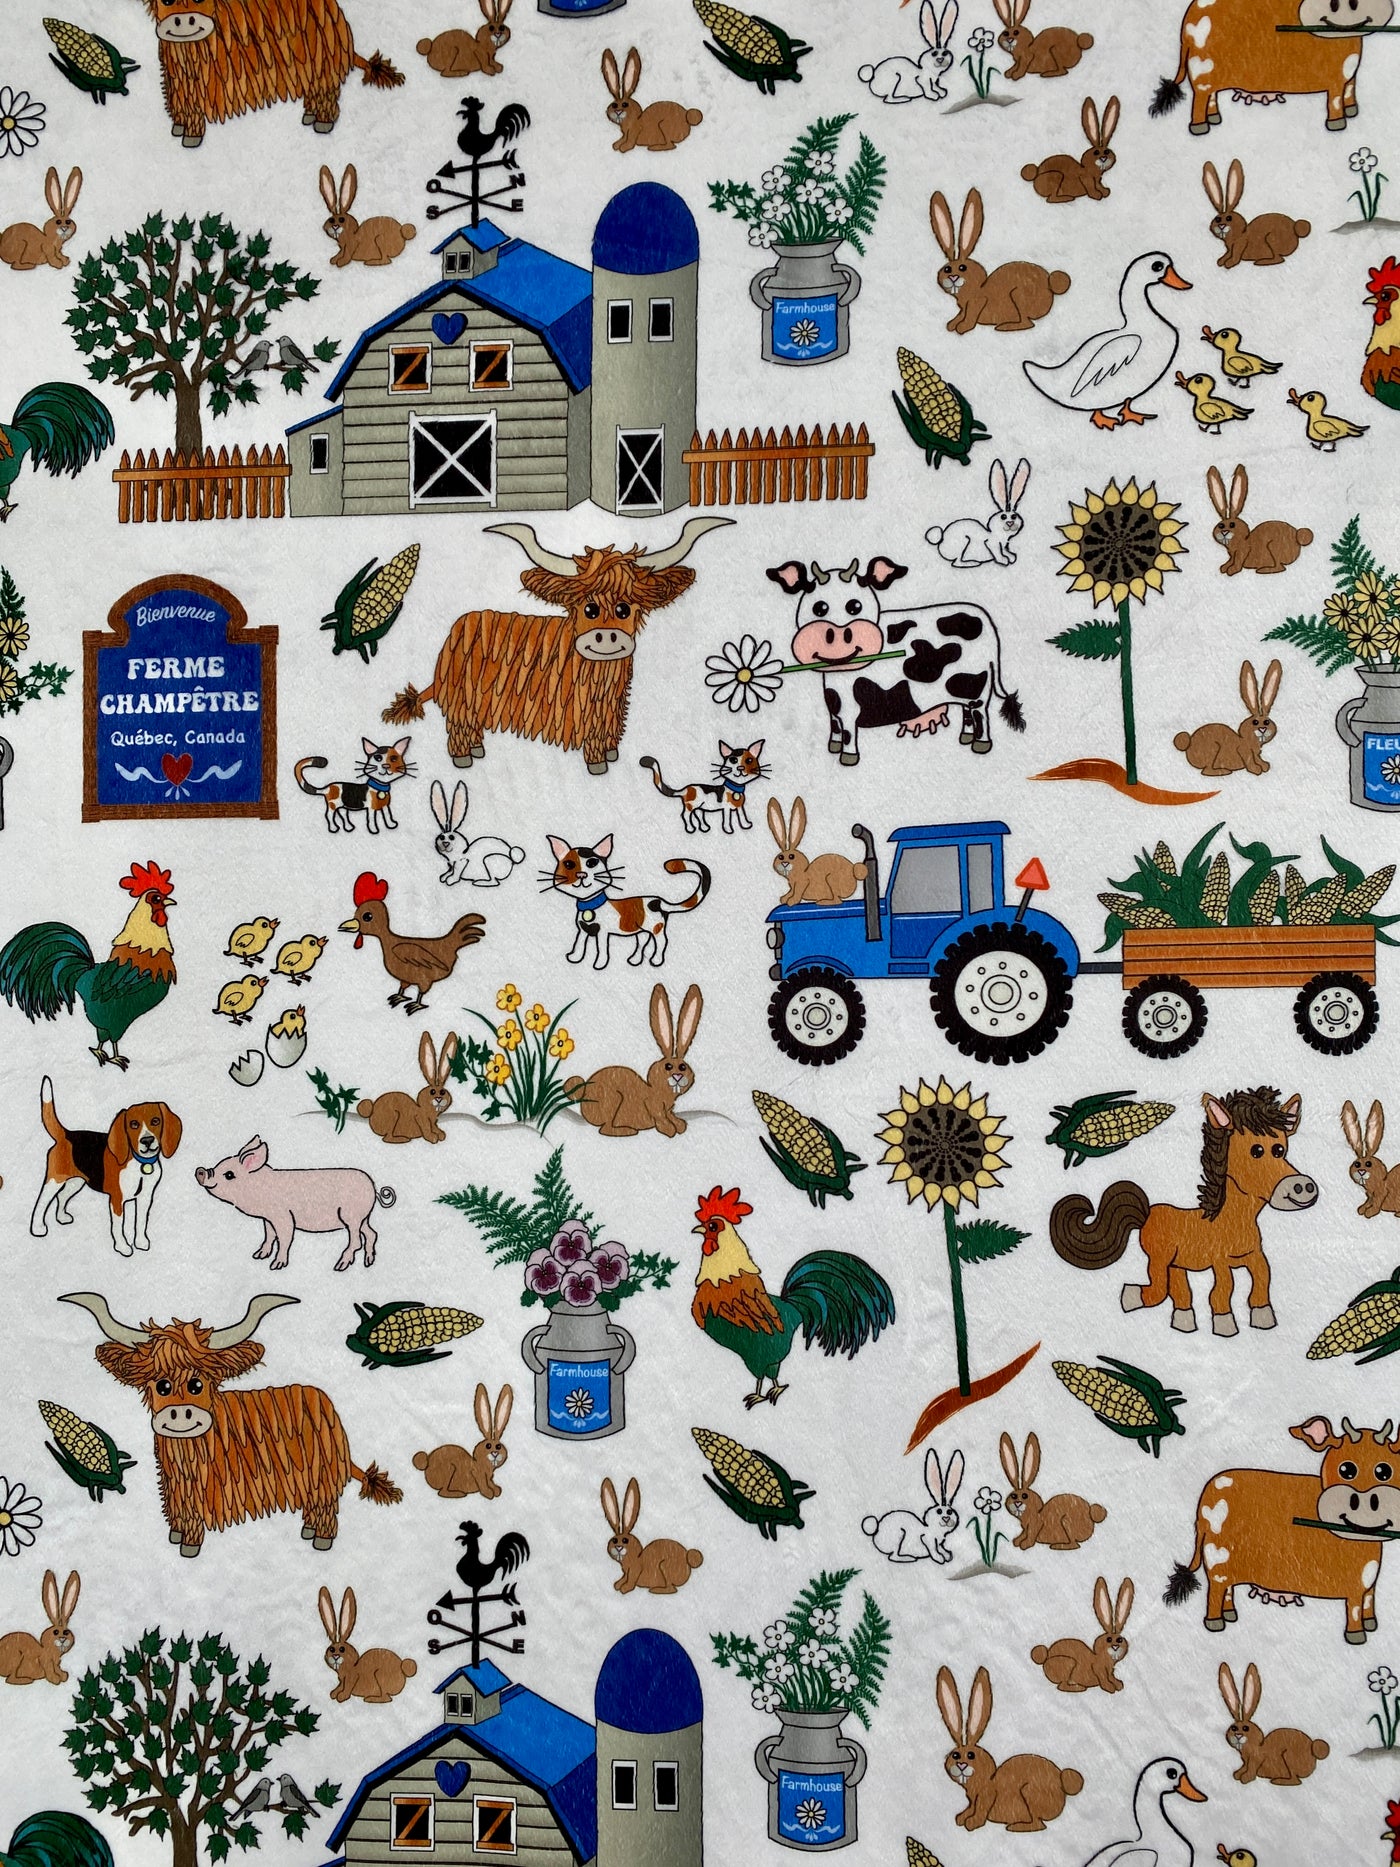 Giant blanket: Royal Blue Country Farmhouse